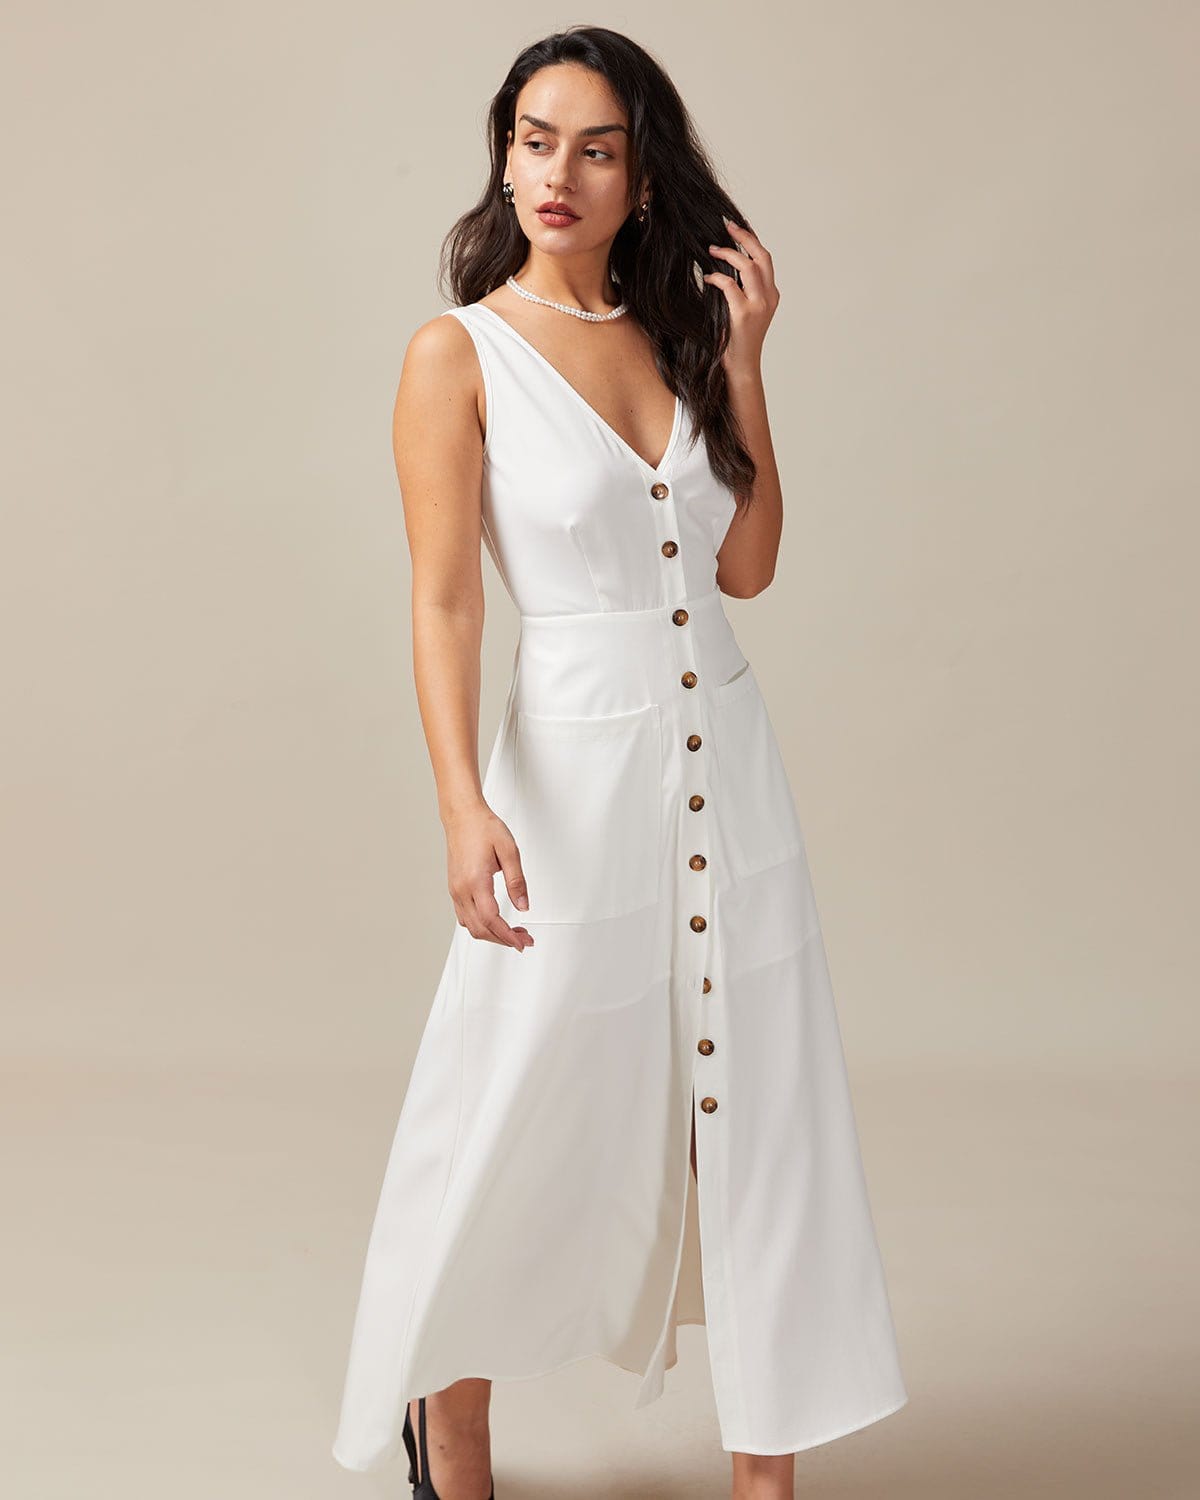 The White V Neck Pocket Sleeveless Maxi Dress- White V Neck Sleeveless ...